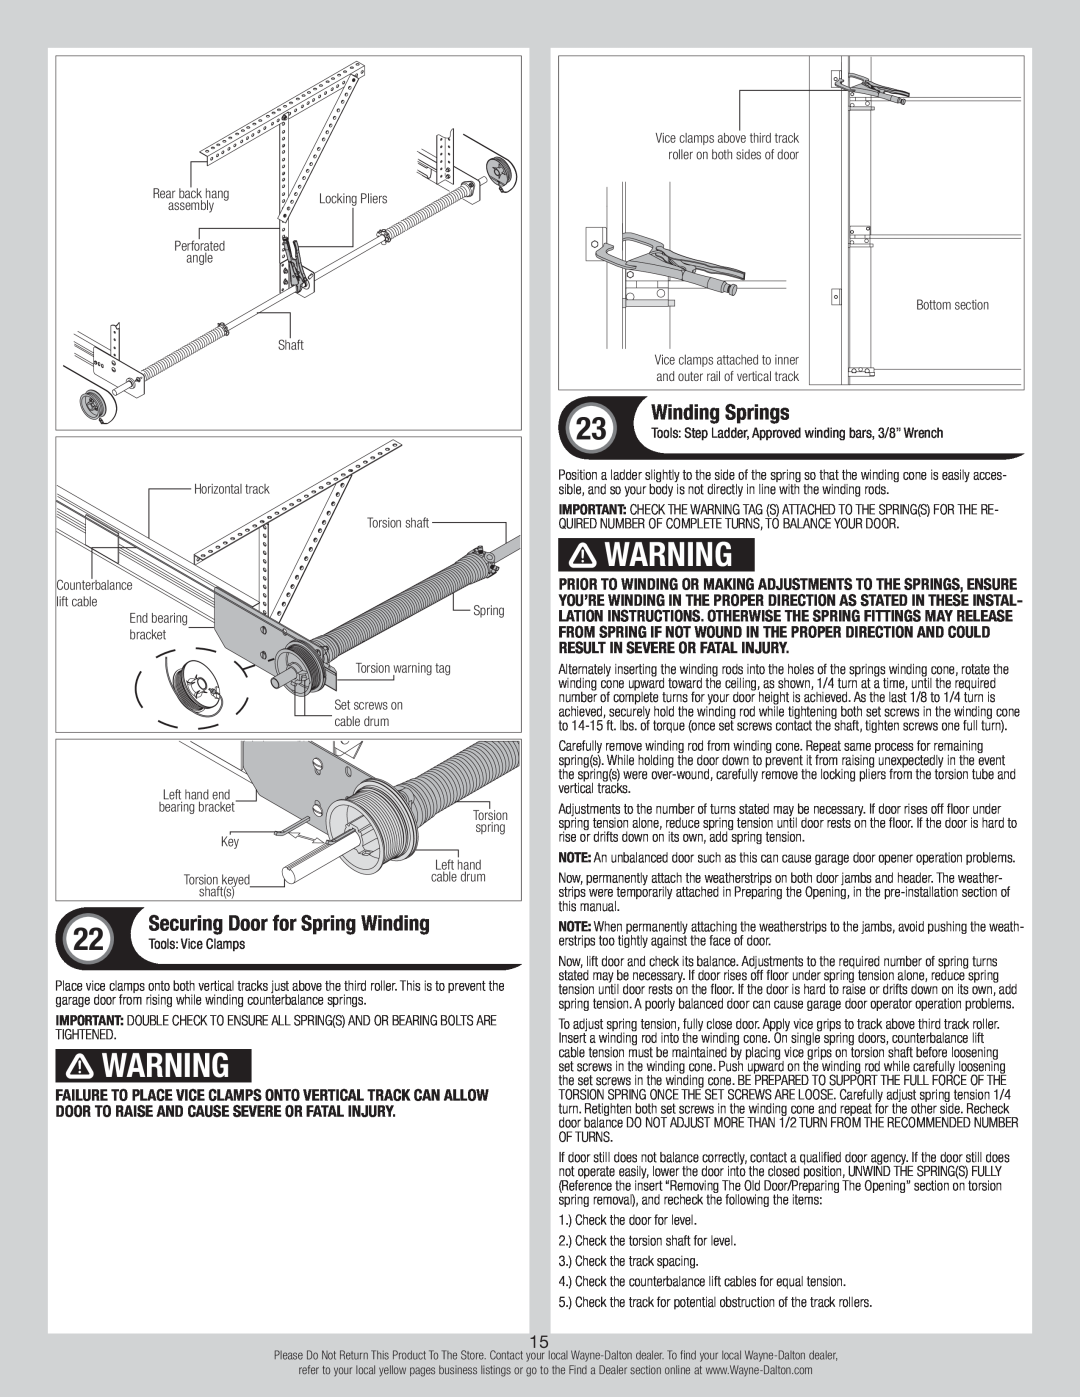 Wayne-Dalton 105/110, 310/311 installation instructions Winding Springs, Securing Door for Spring Winding 